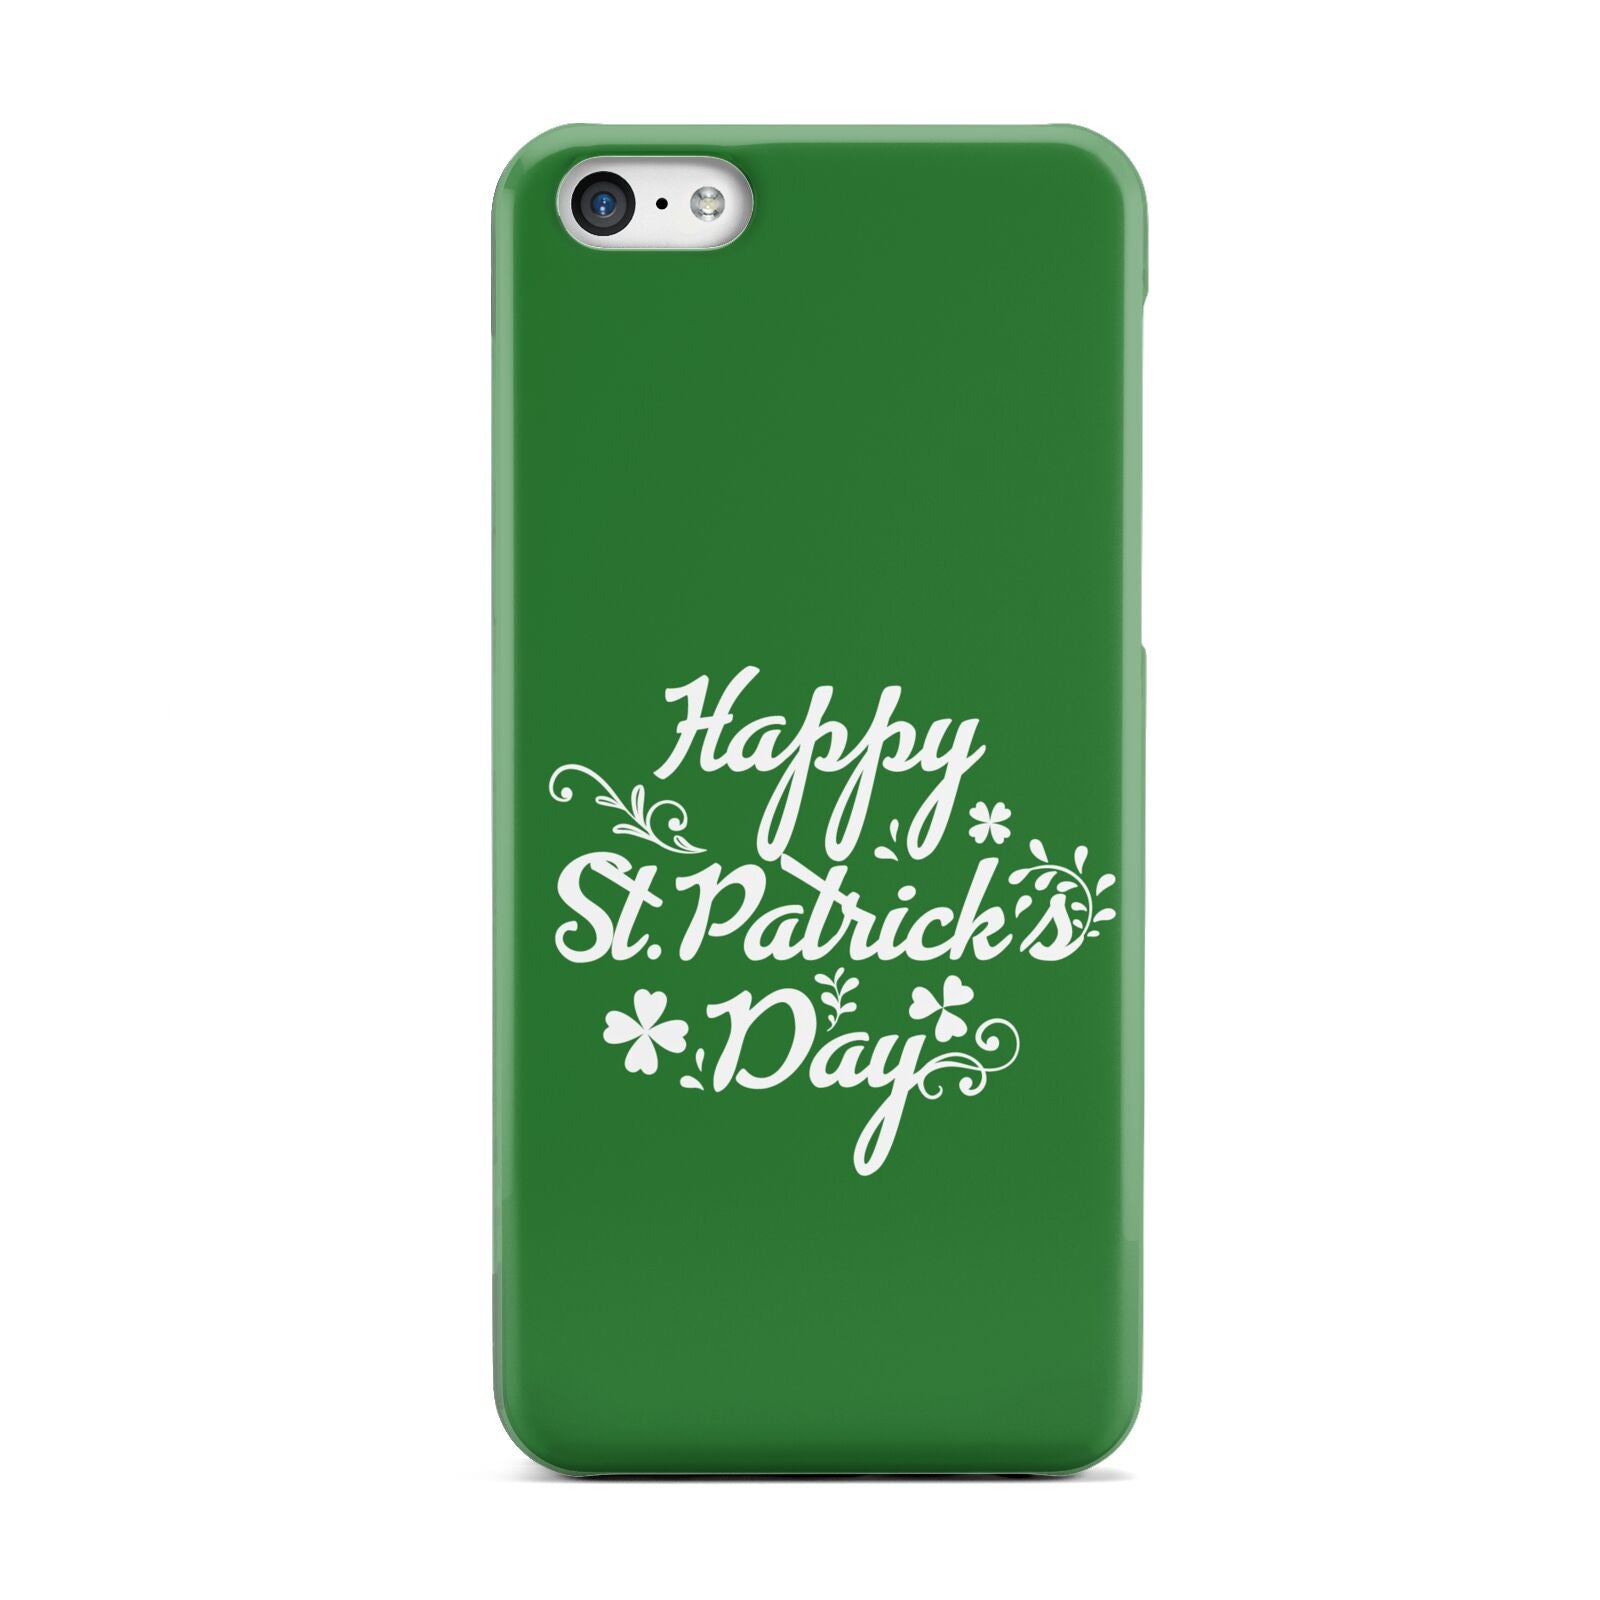 St Patricks Day Apple iPhone 5c Case